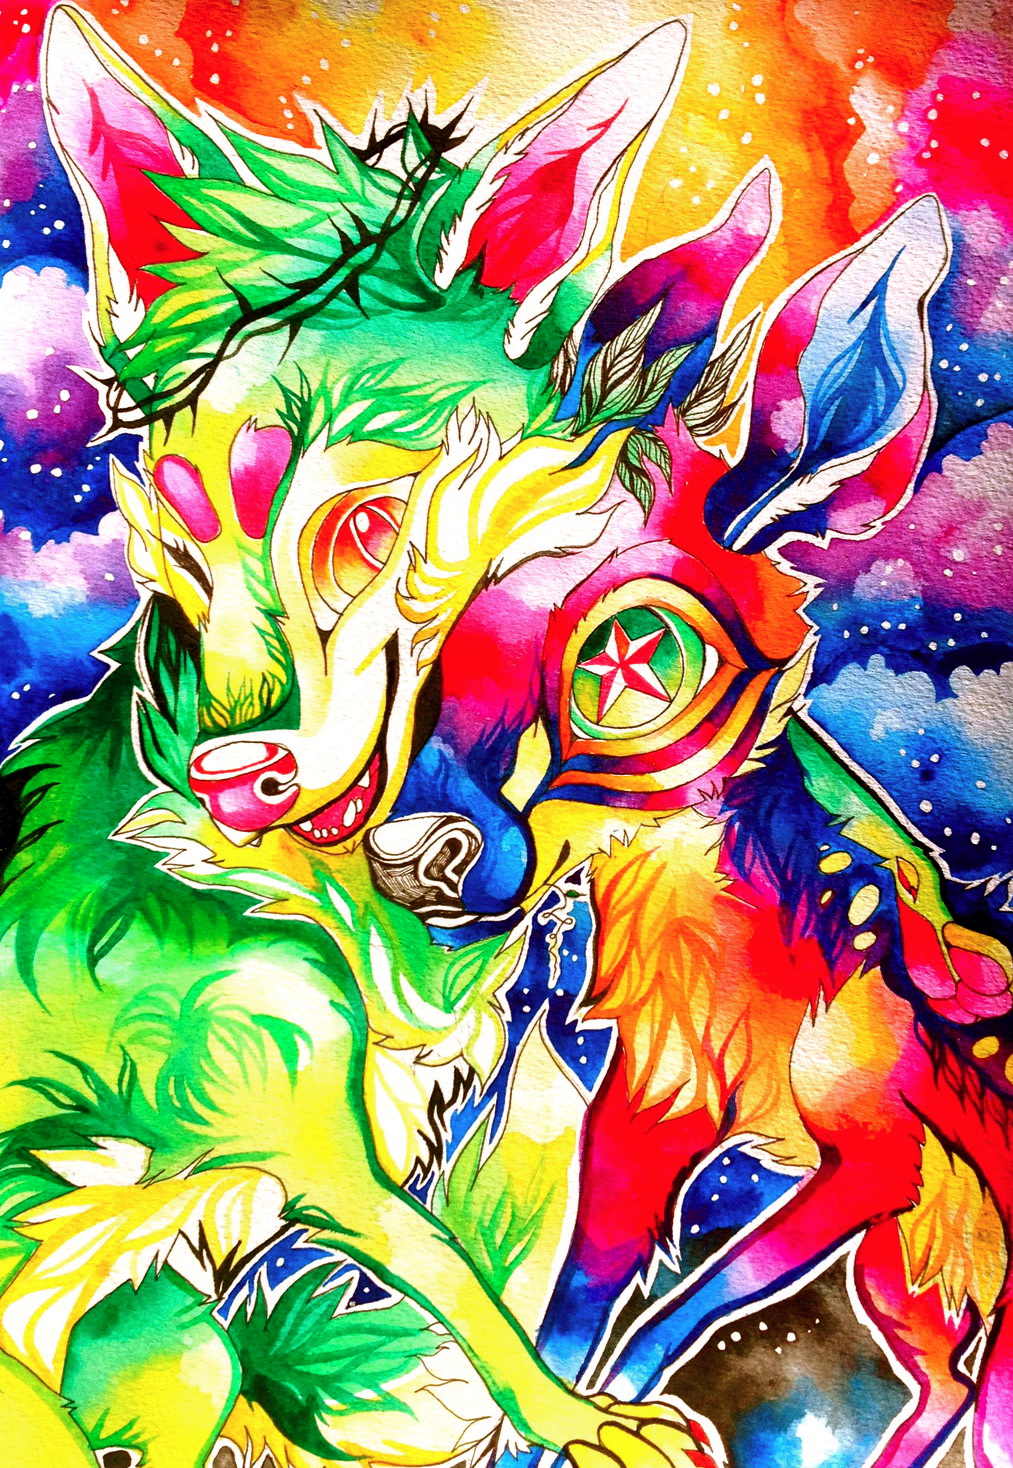 cervine clara_(artist) colorful deer falvie_(character) female fionbri fruize fur green_fur mammal psychedelic warm_colors